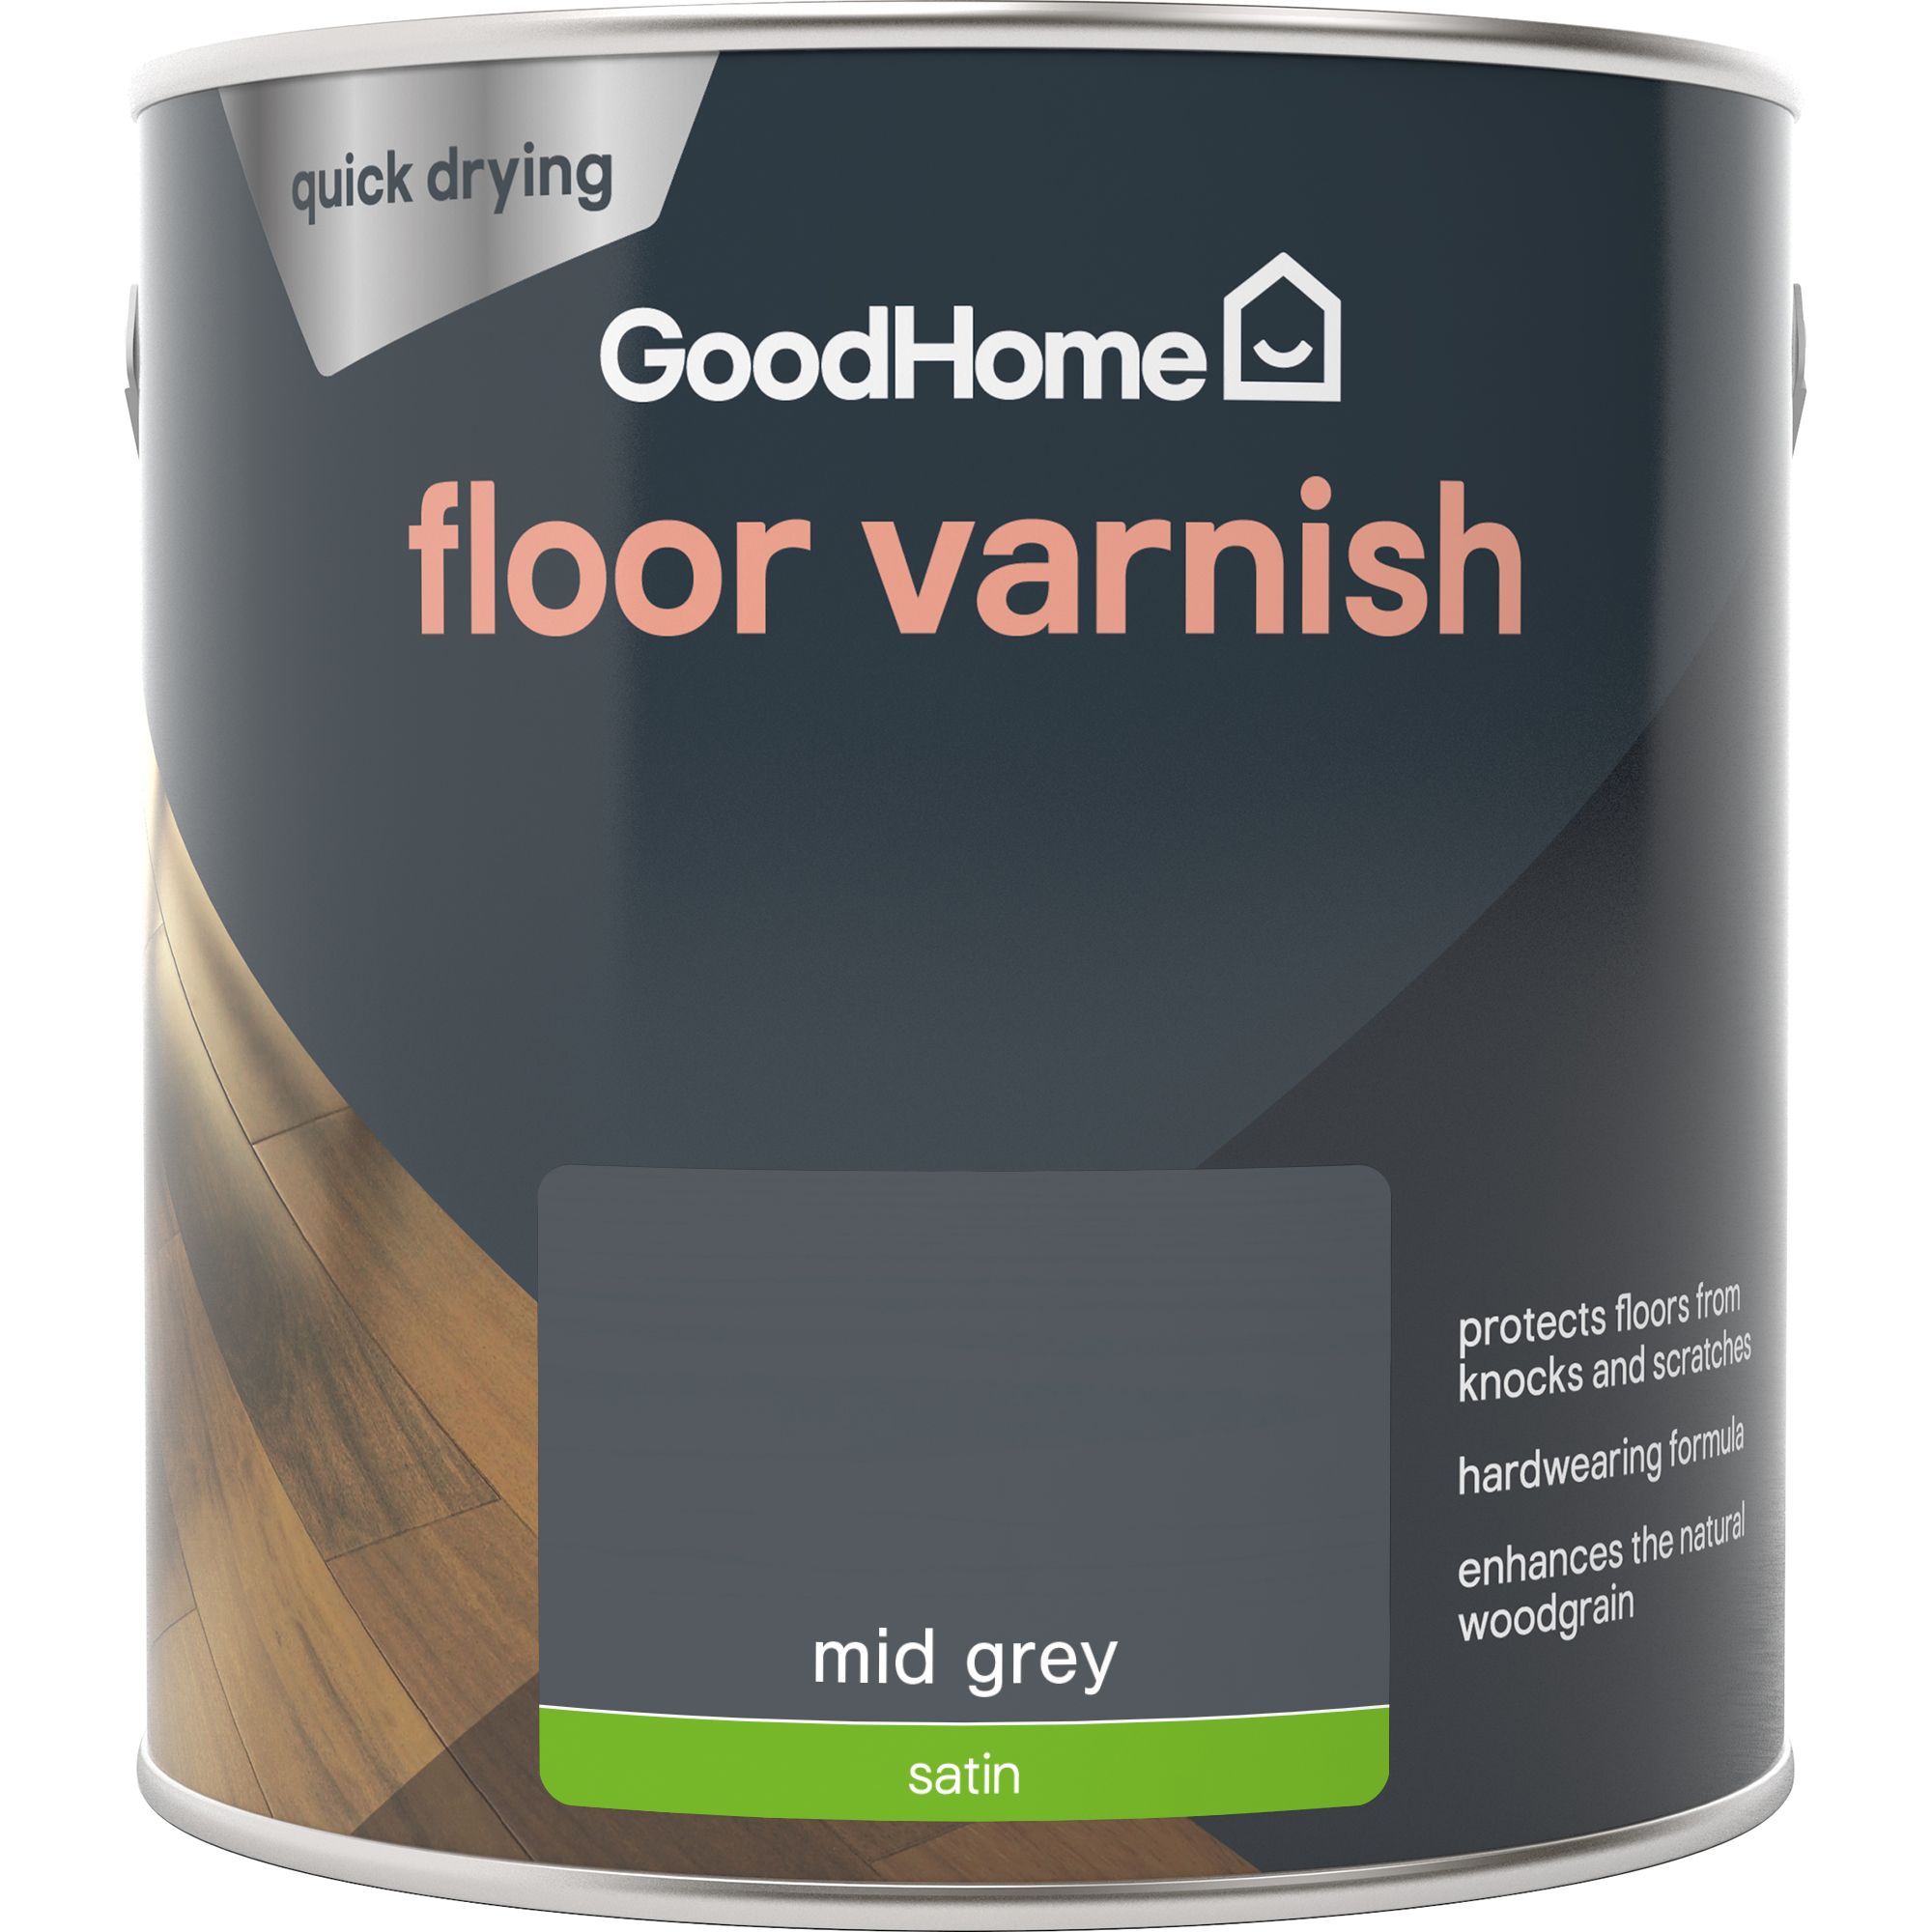 GoodHome Mid Grey Satin Floor Wood varnish, 2.5L